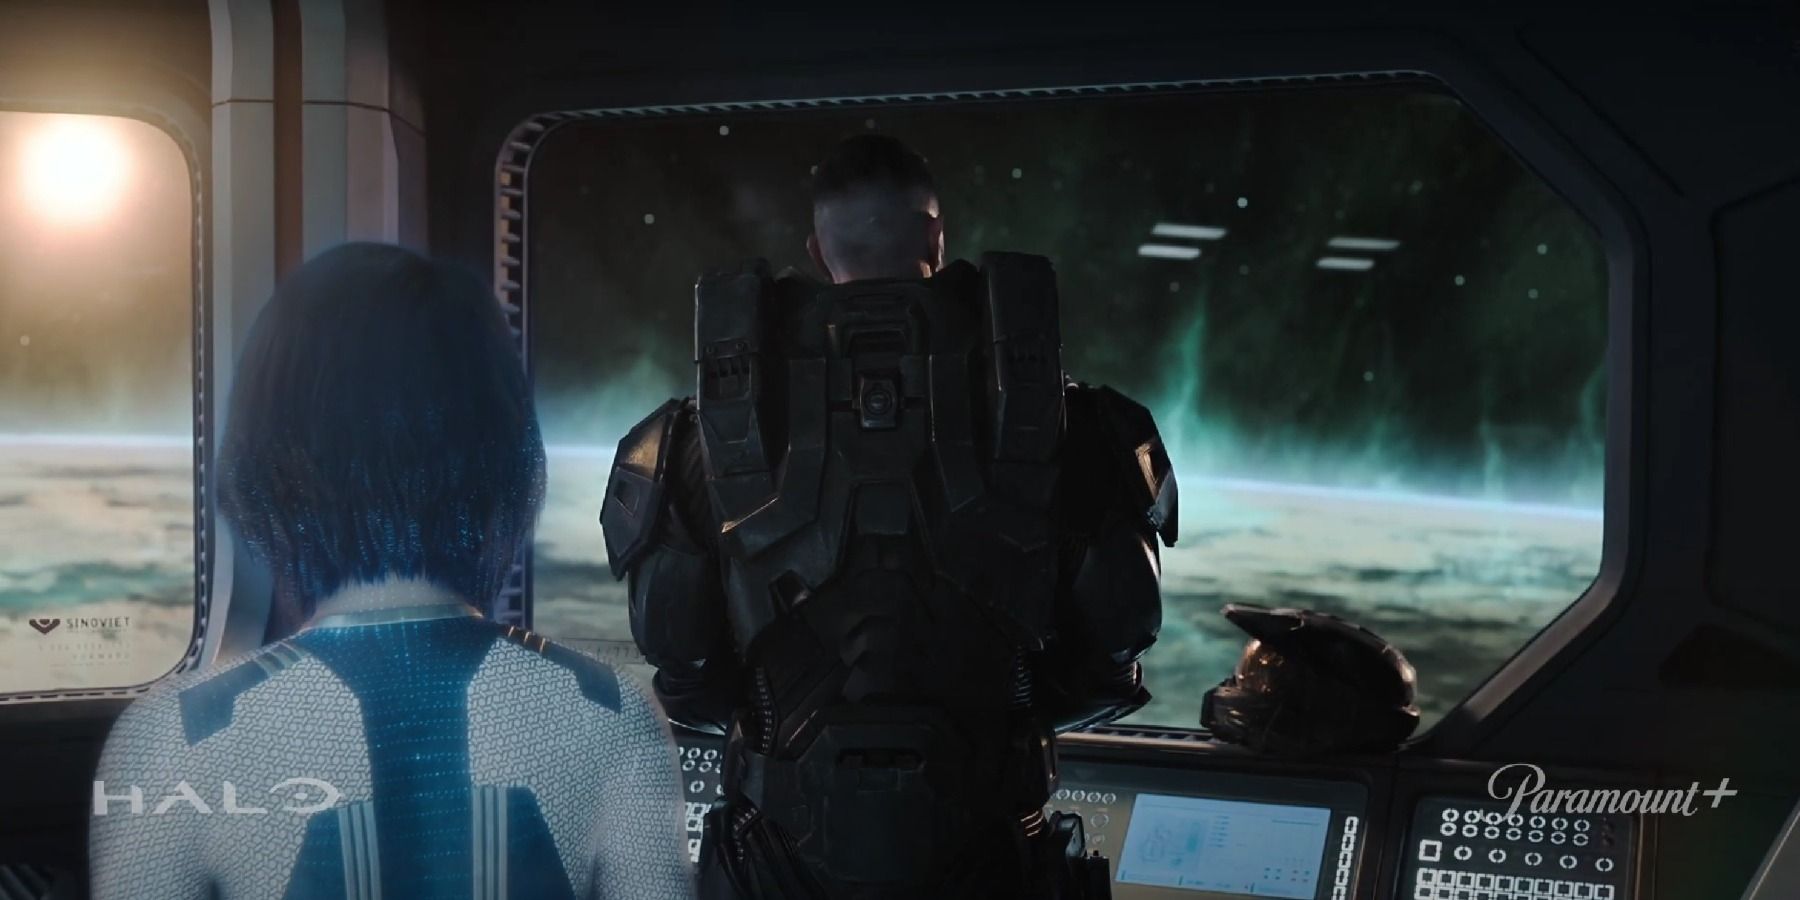 Cortana and Master Chief backshot in Halo series